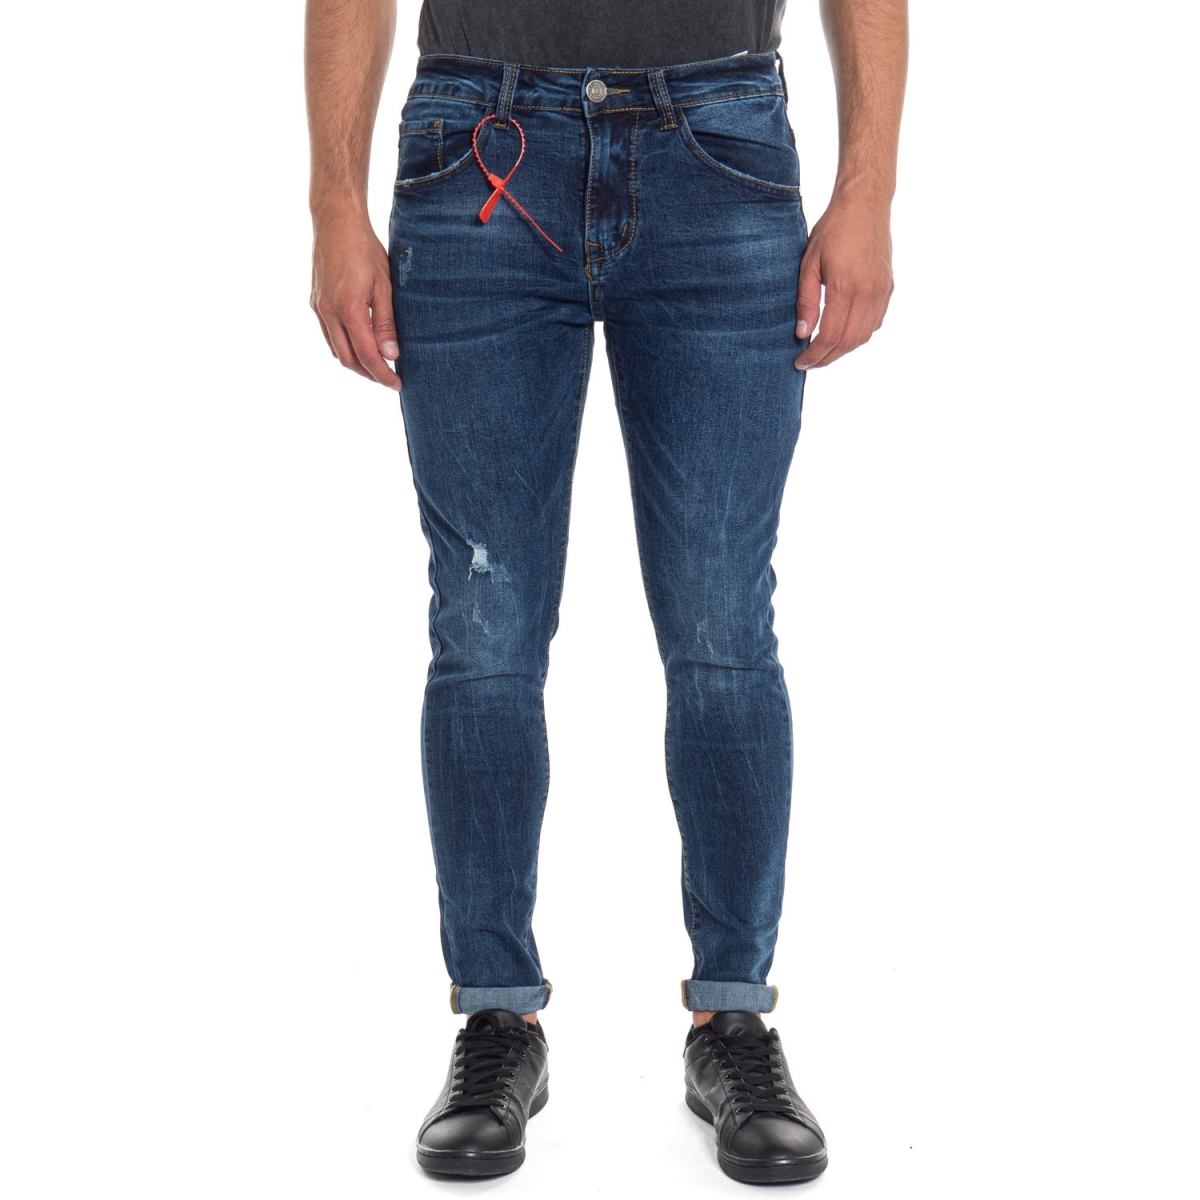 Kleidung Jeans mann Jeans LPM2202 LANDEK PARK Cafedelmar Shop